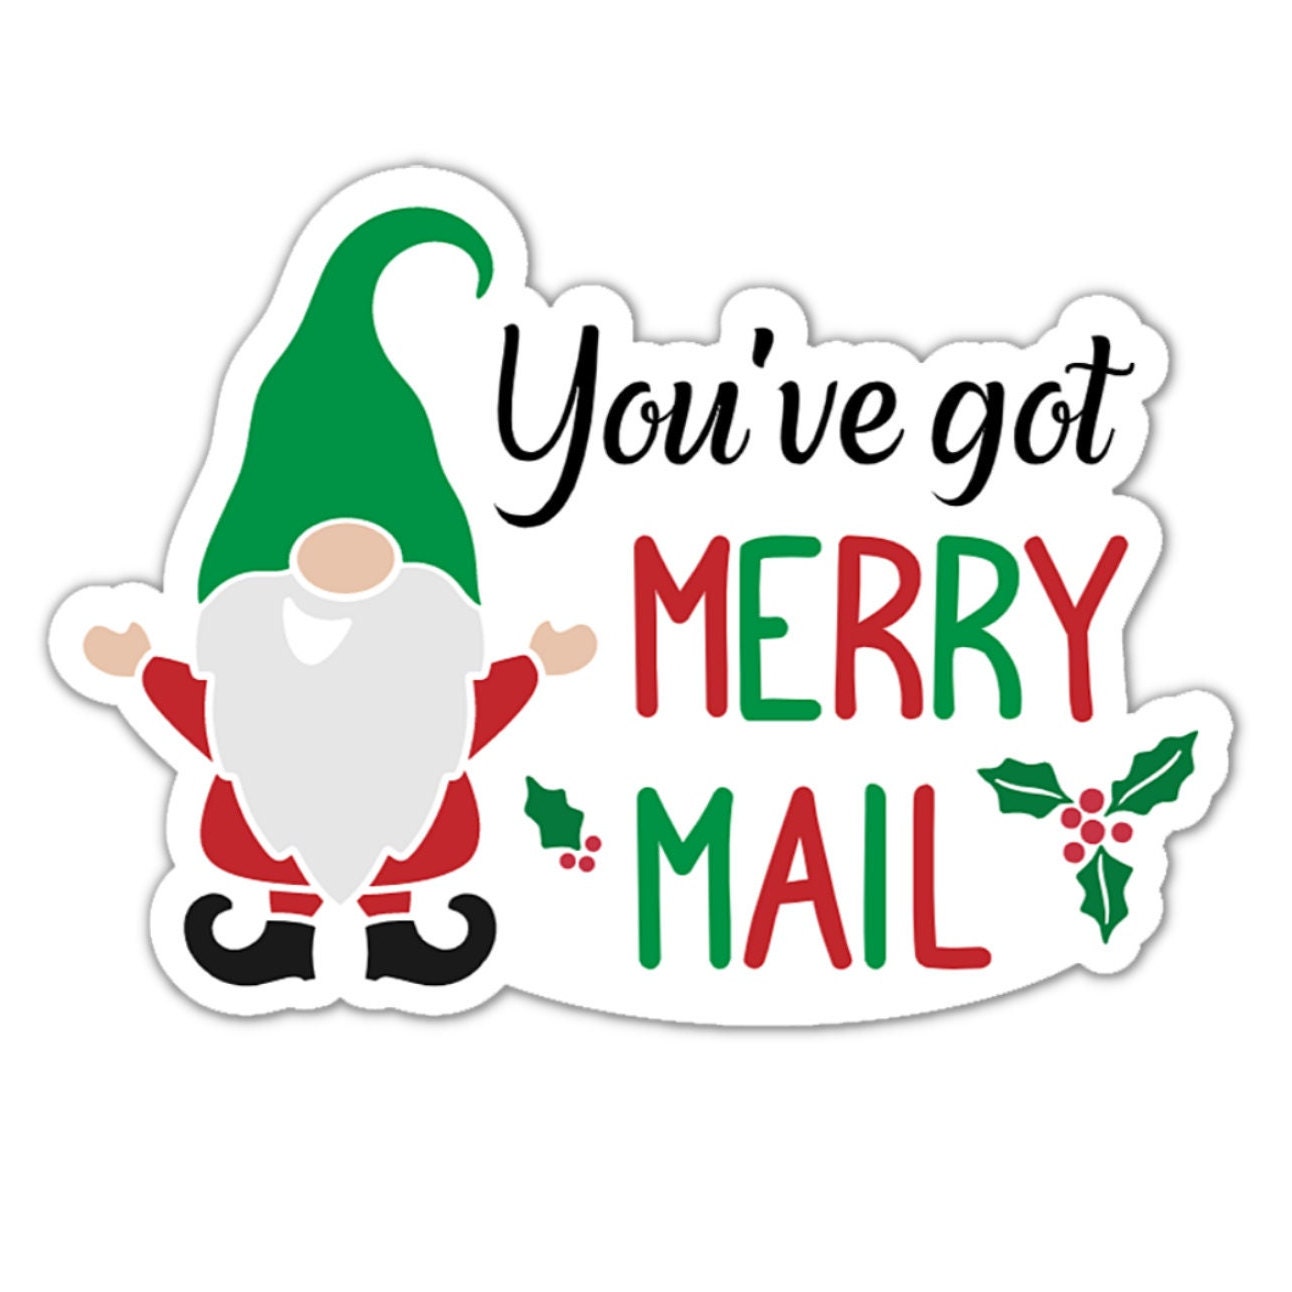 We've Got Christmas Mail